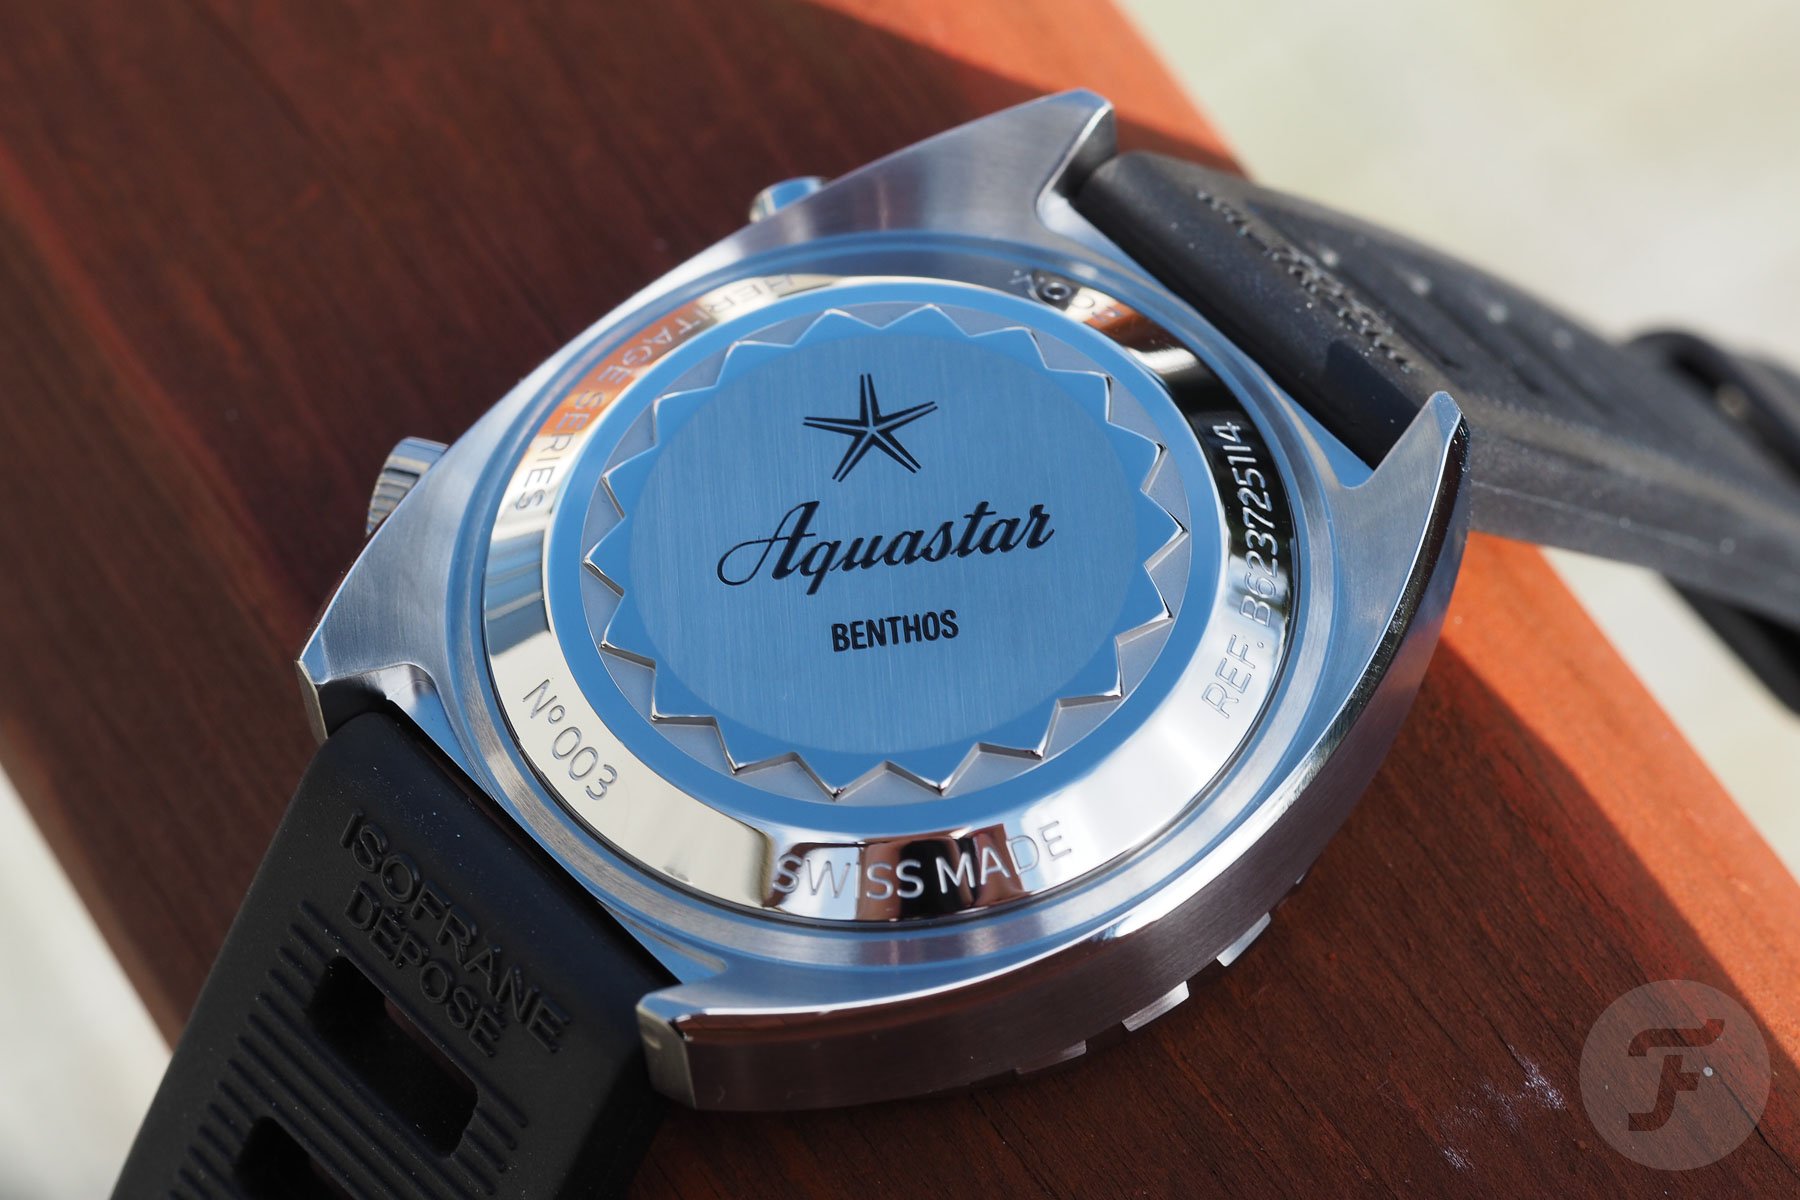 Aquastar Benthos 500 Founder’s Edition Chronograph Case back